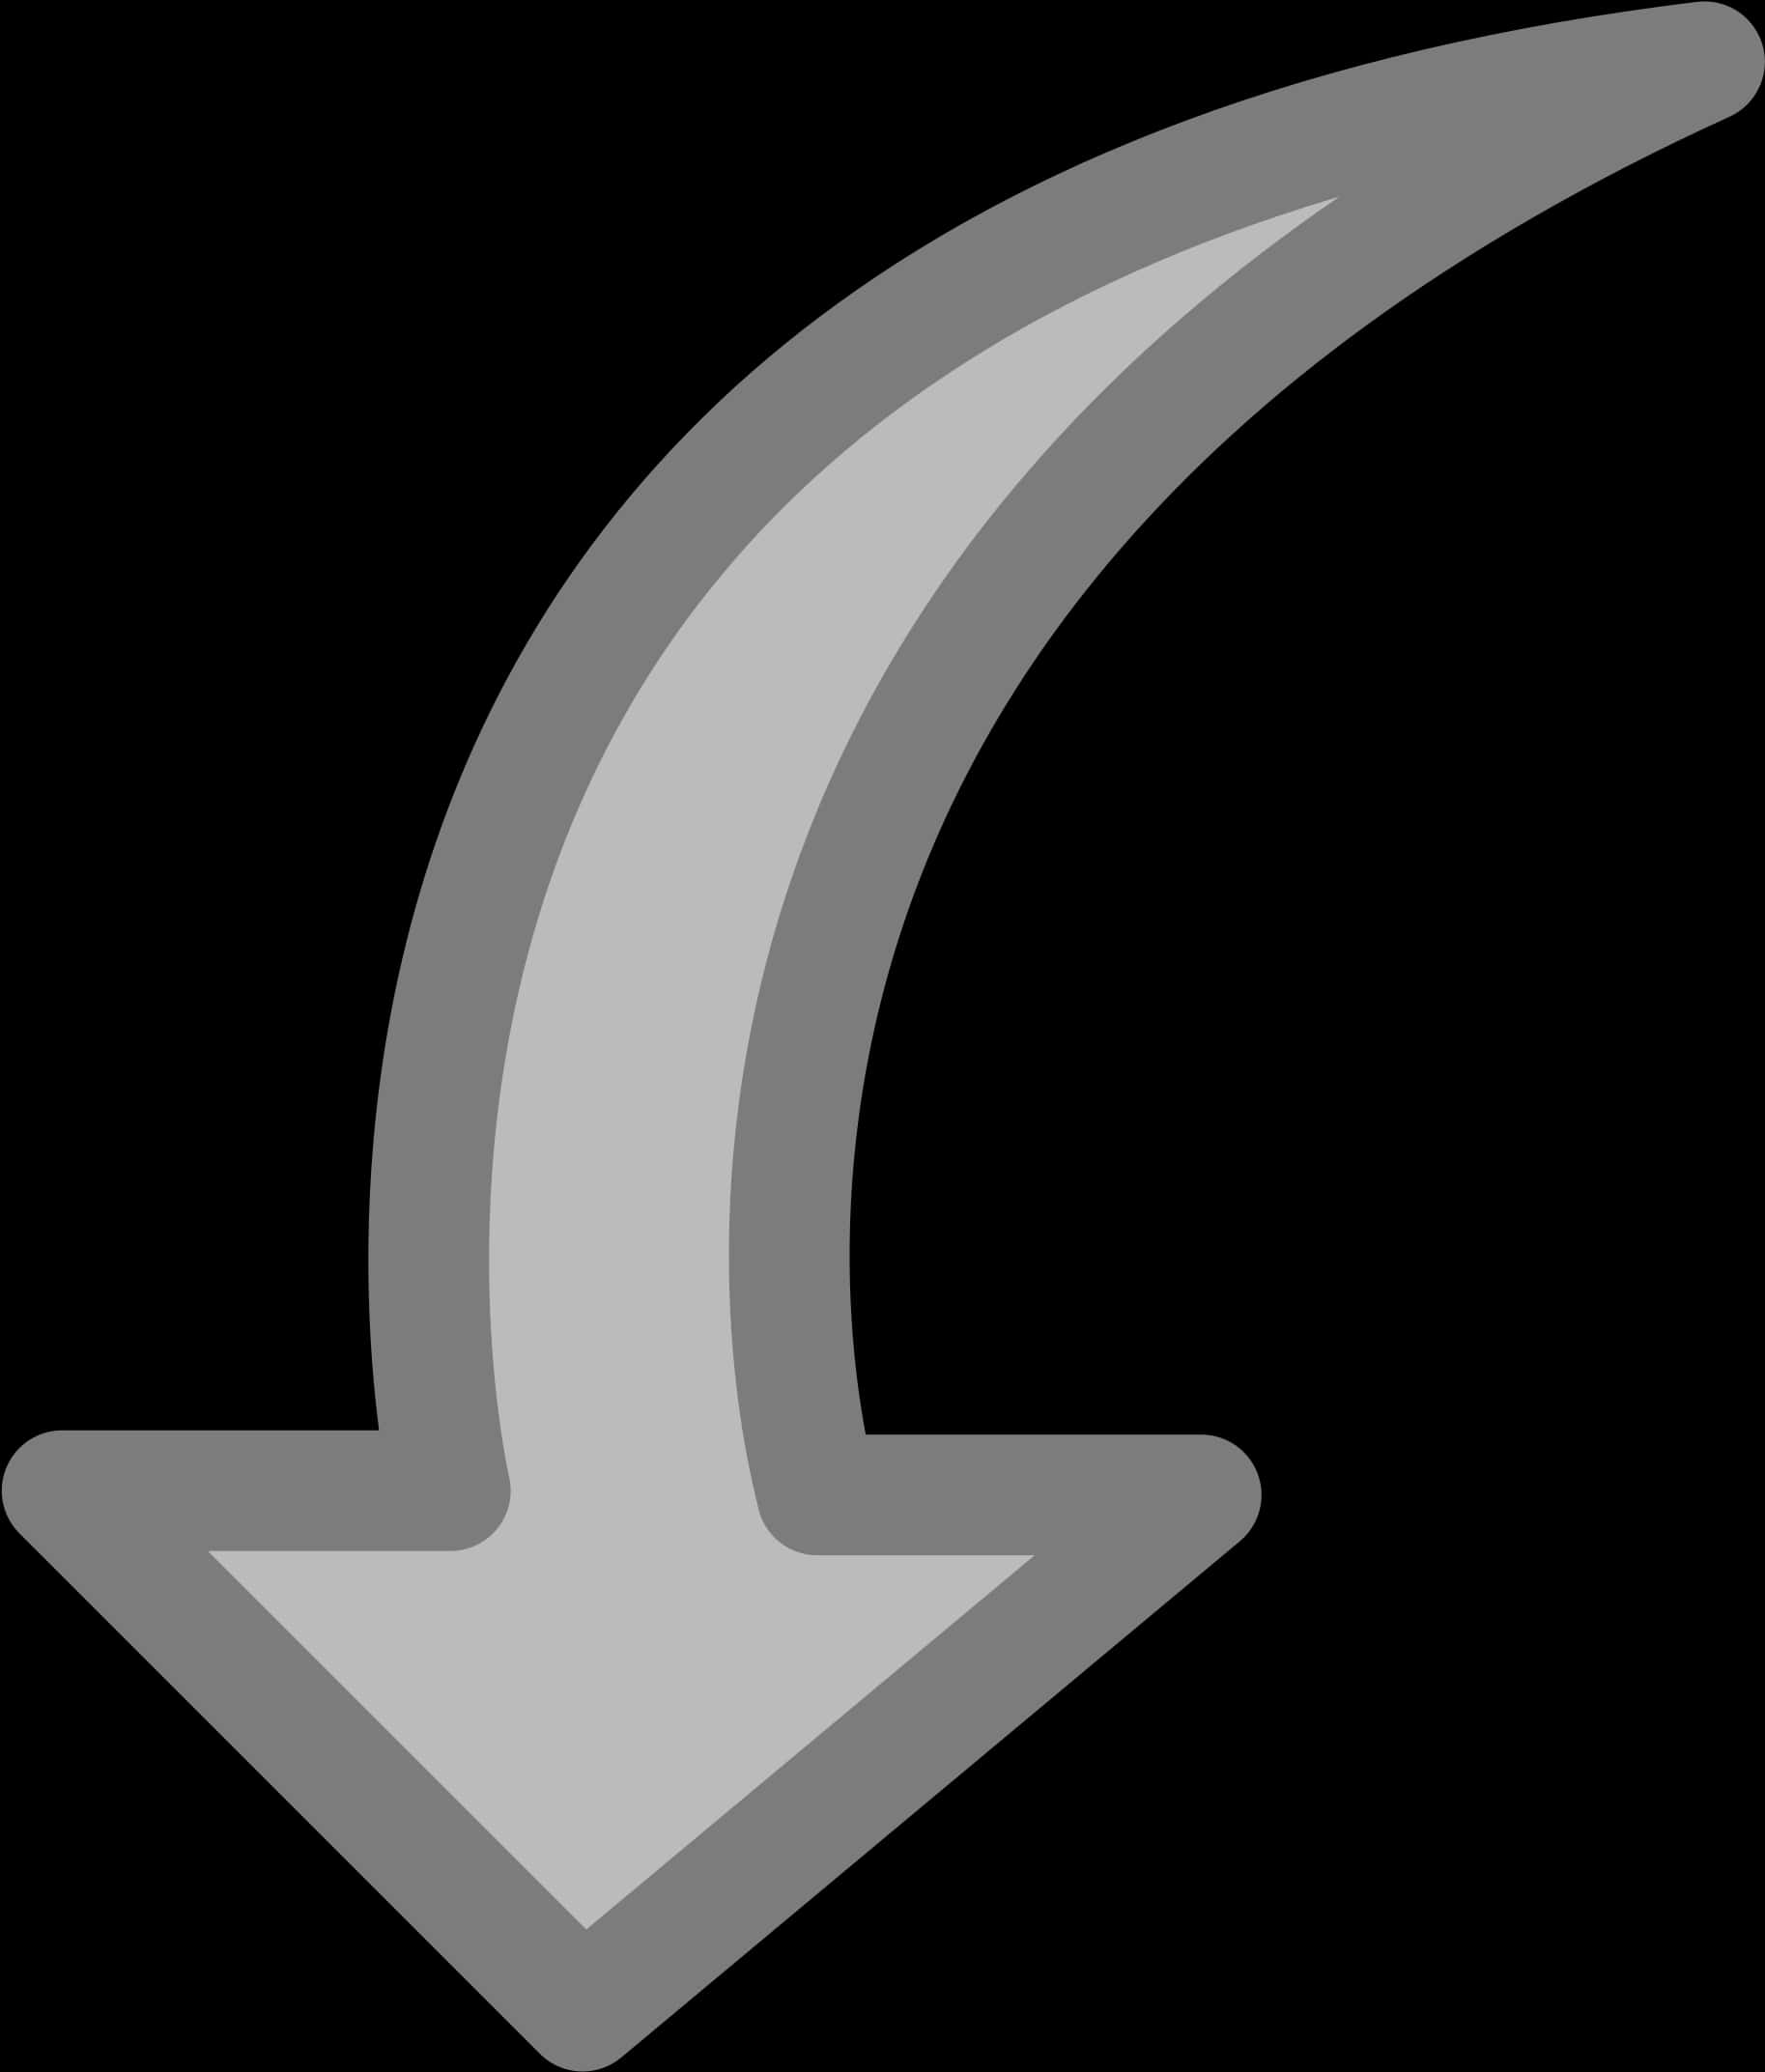 Dark And Light Gray Curved Arrow